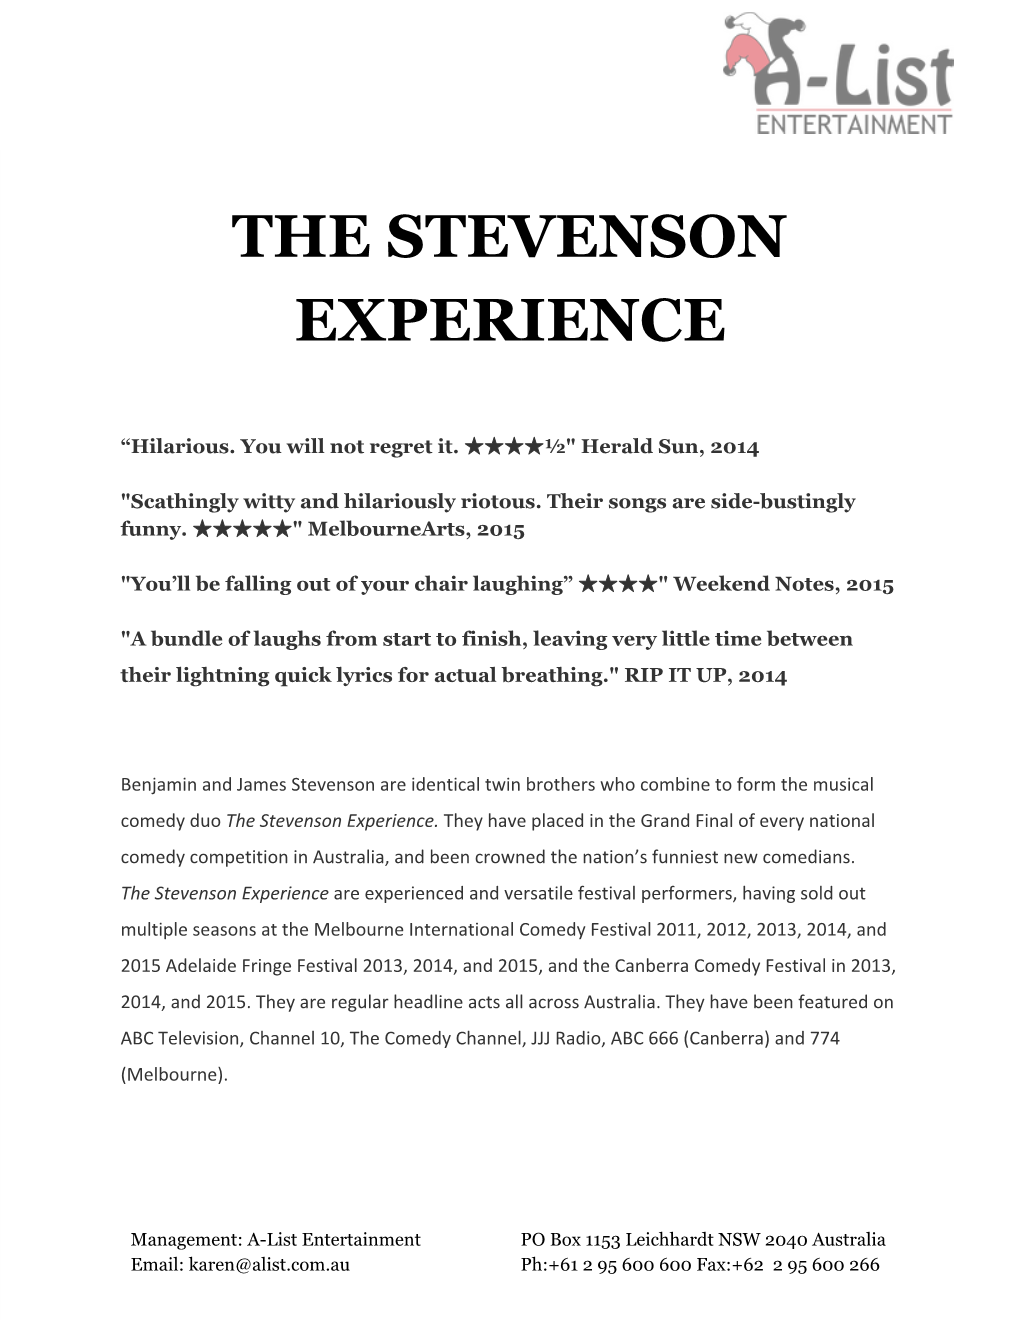 The Stevenson Experience